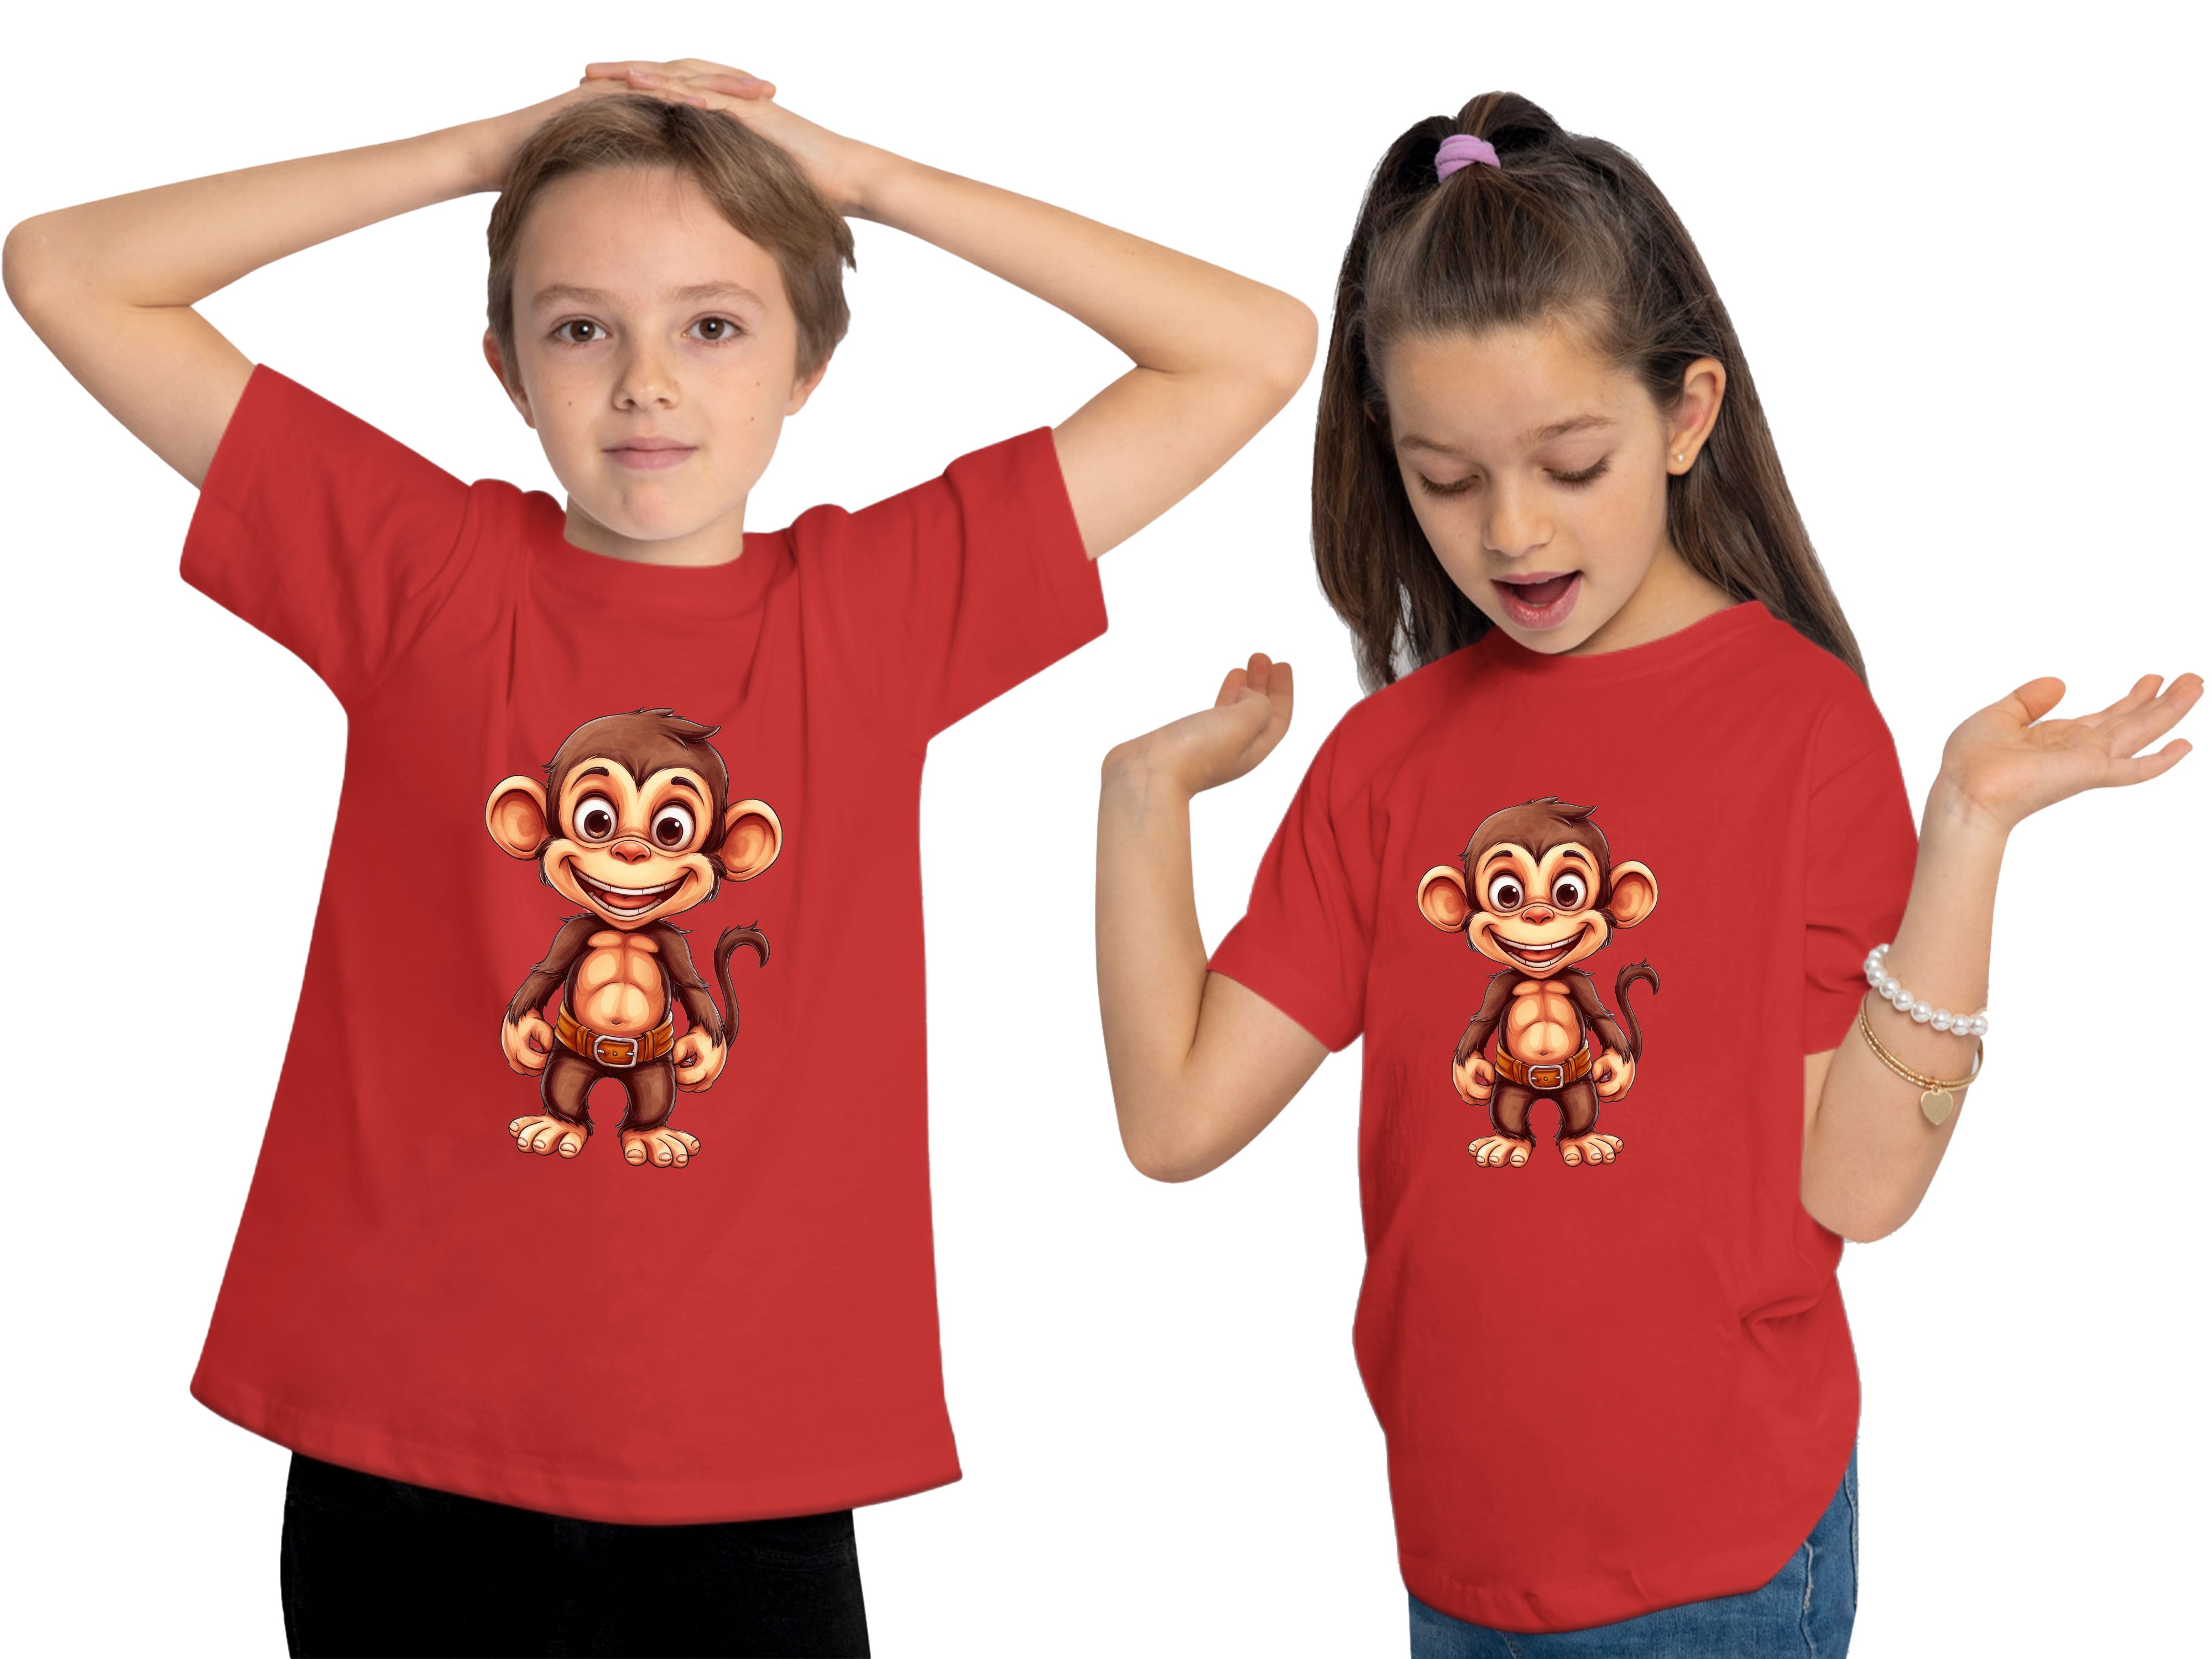 Baby Wildtier mit bedruckt T-Shirt Schimpanse Affe Aufdruck, Print Kinder rot - i276 MyDesign24 Baumwollshirt Shirt